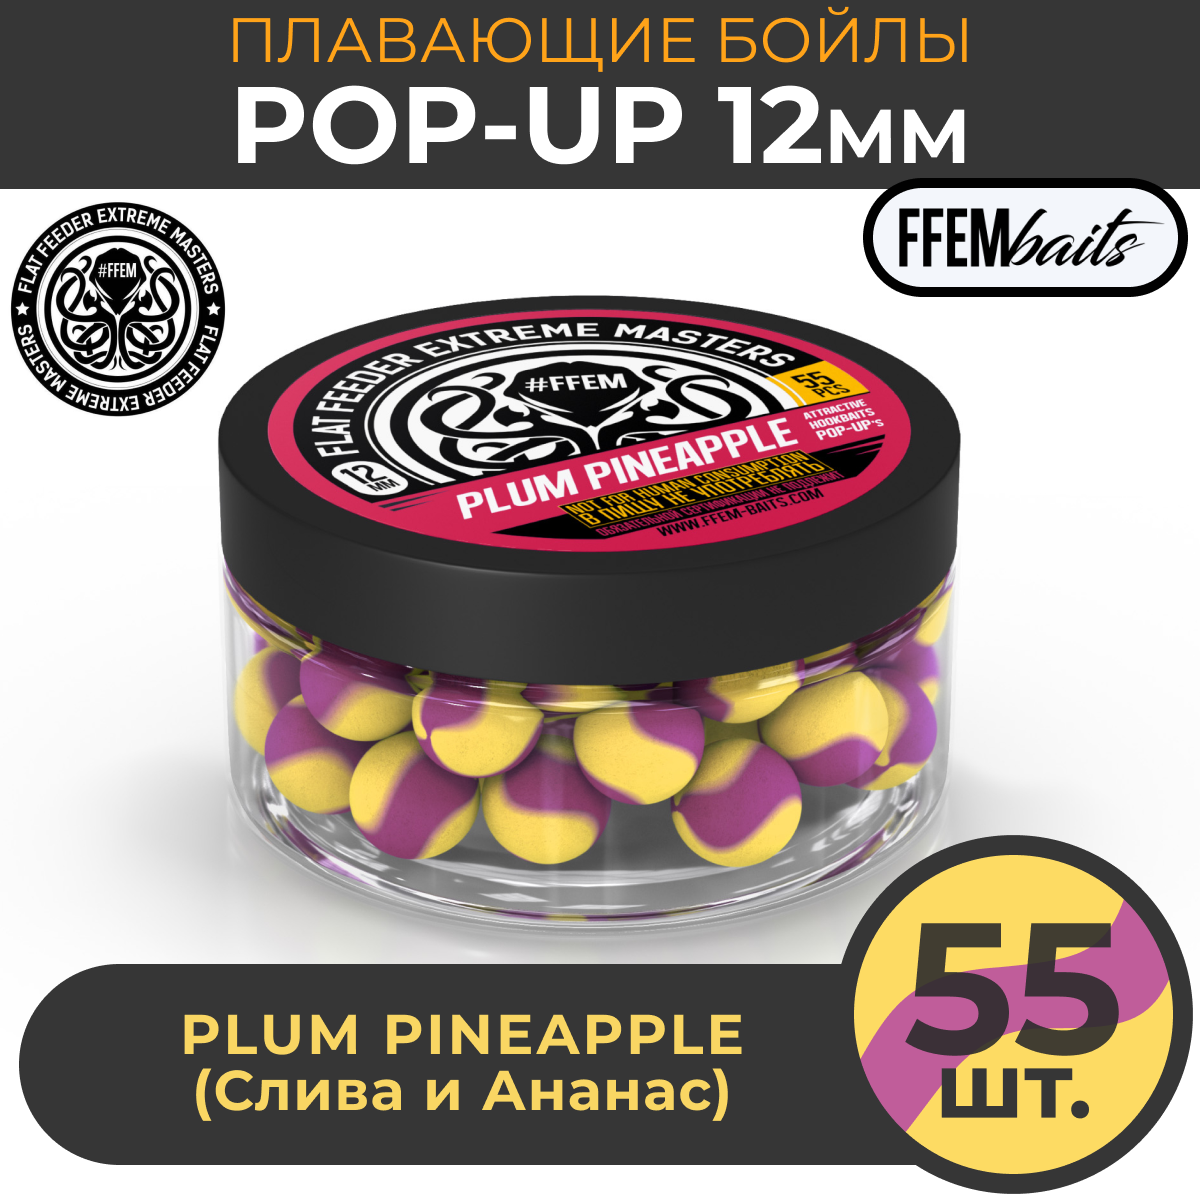 Плавающие бойлы POP-UP 12 мм Plum Pineapple Слива и ананас, 100мл (55шт), супер аттрактивные плавающие насадочные бойлы поп-ап / FFEM Поп ап 12мм